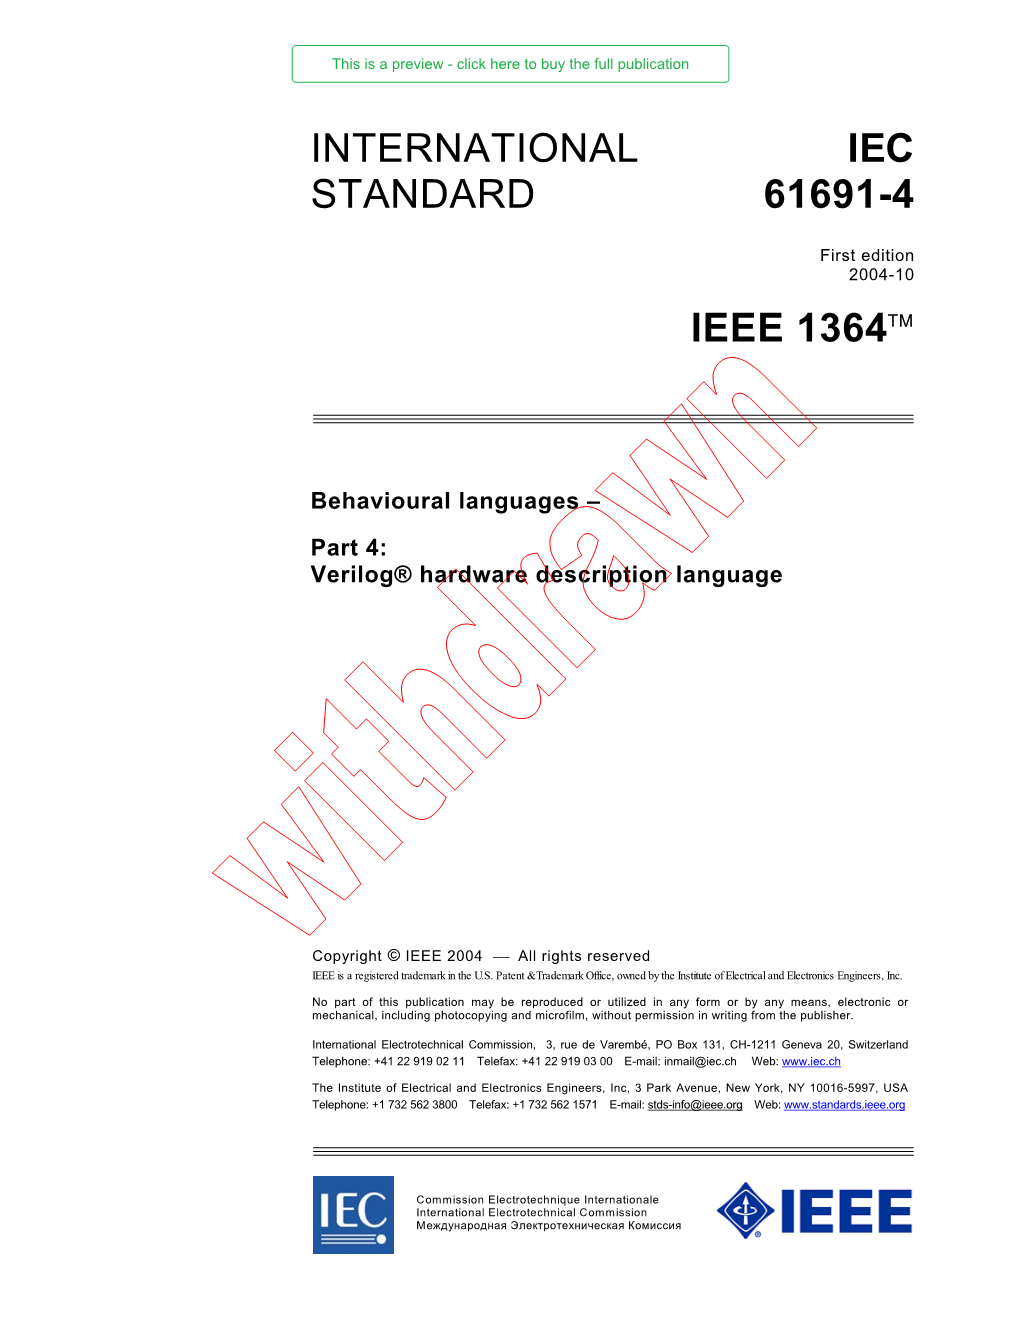 International Standard Iec 61691-4 Ieee 1364™